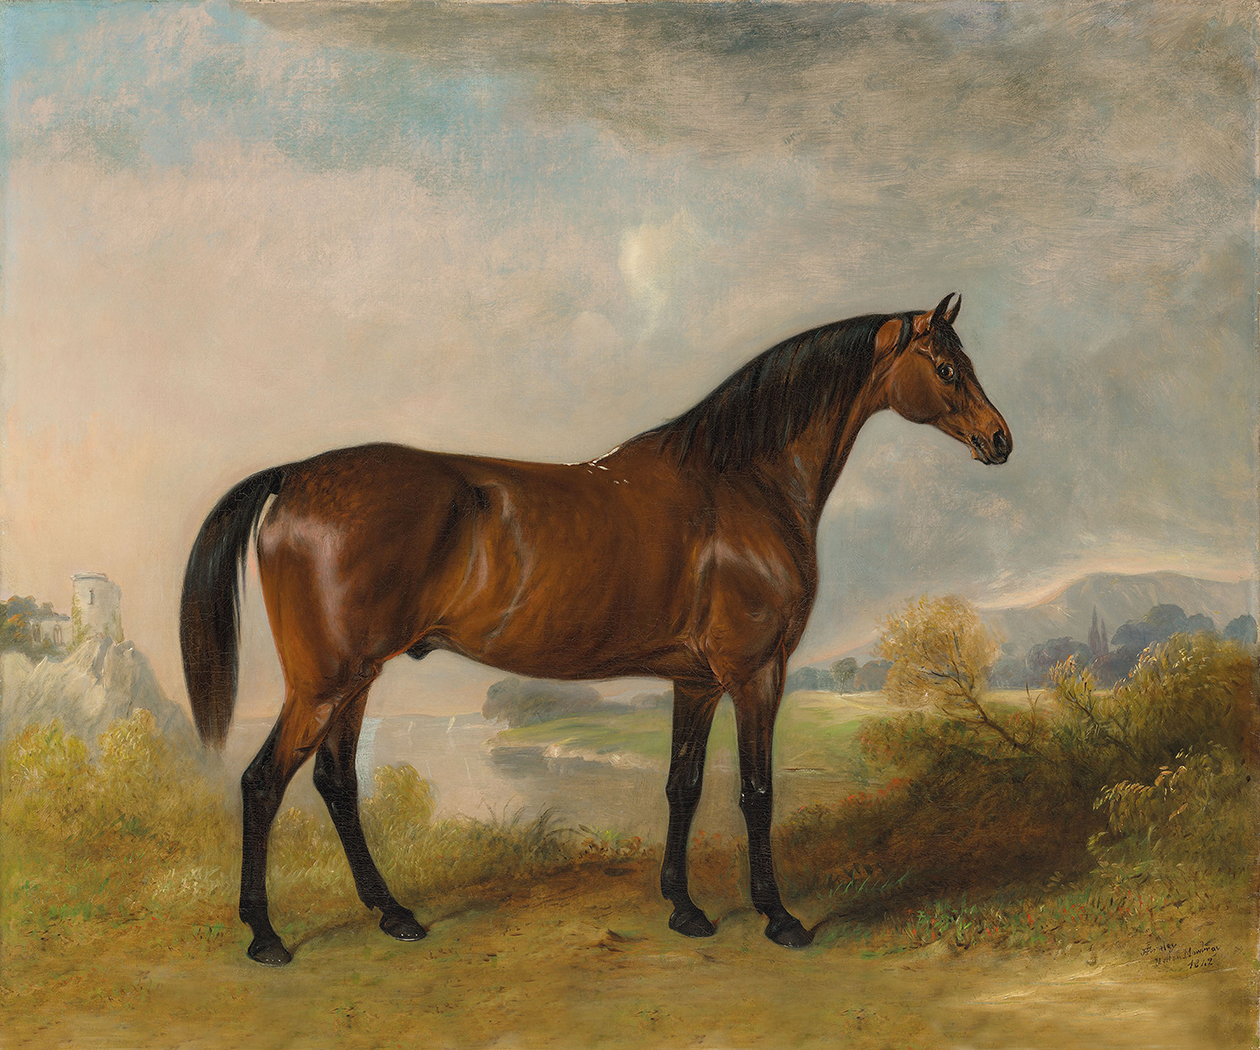 Equestrian/Fox Equestrian A Bay Hunter Framed Oil Painting Print ...